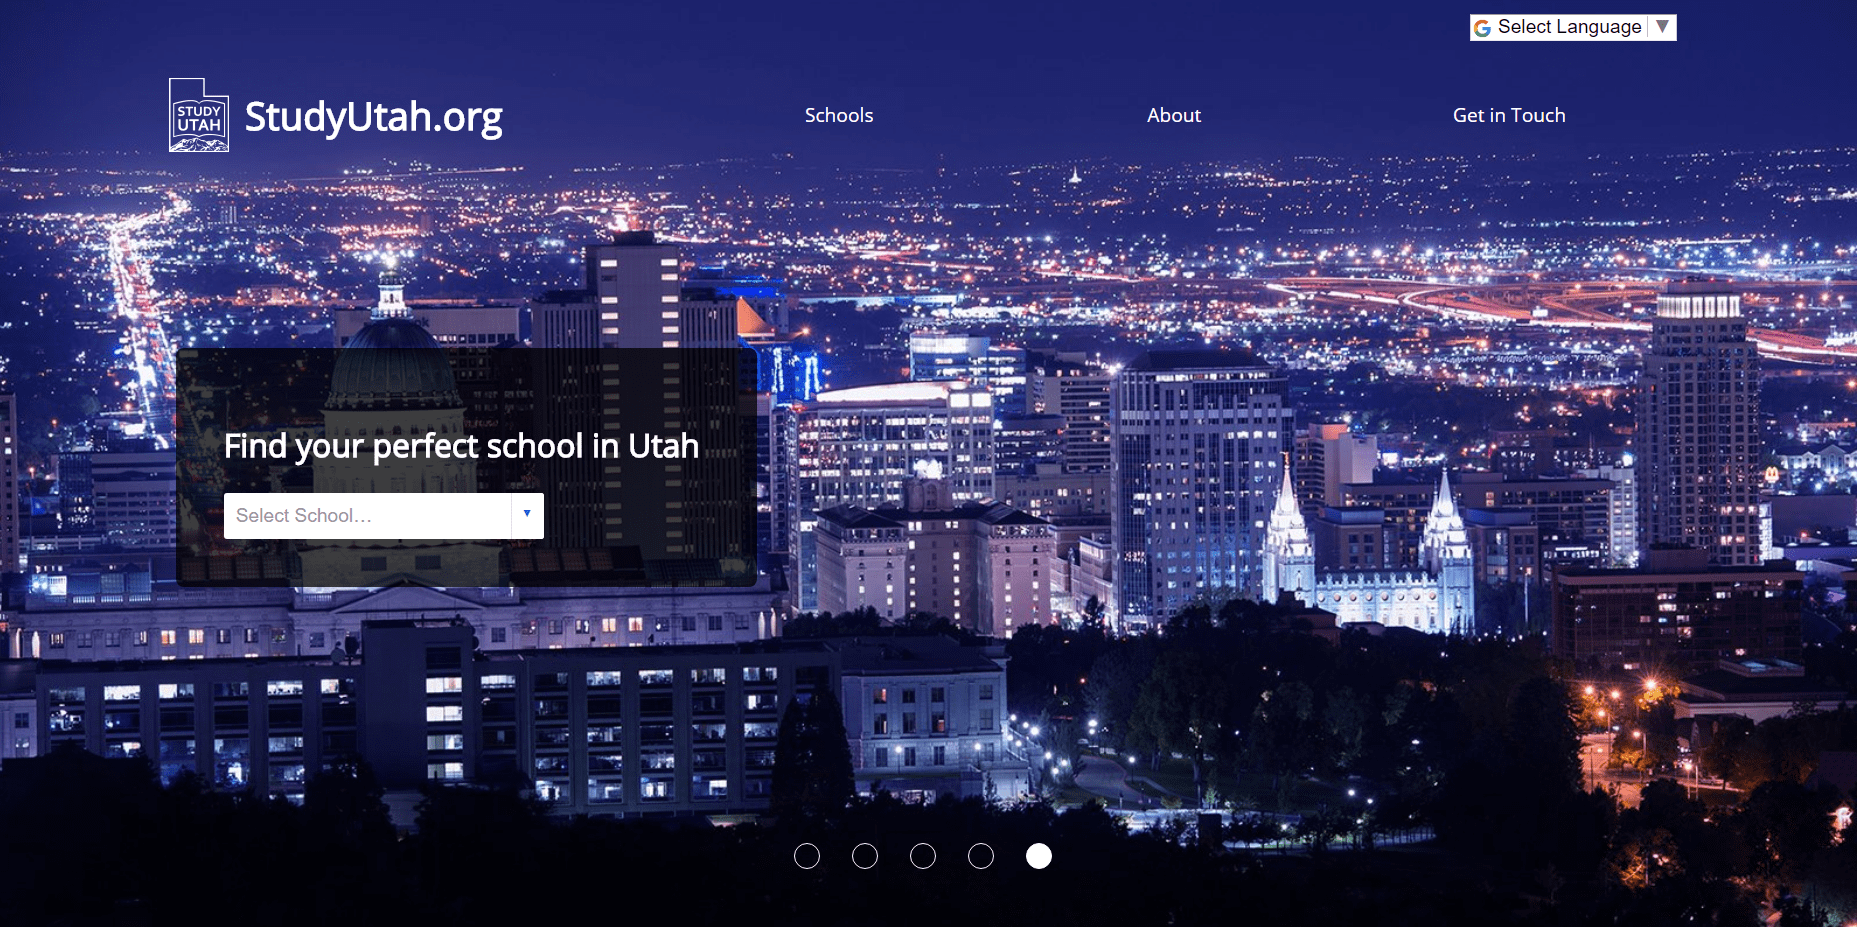 New Study Utah website